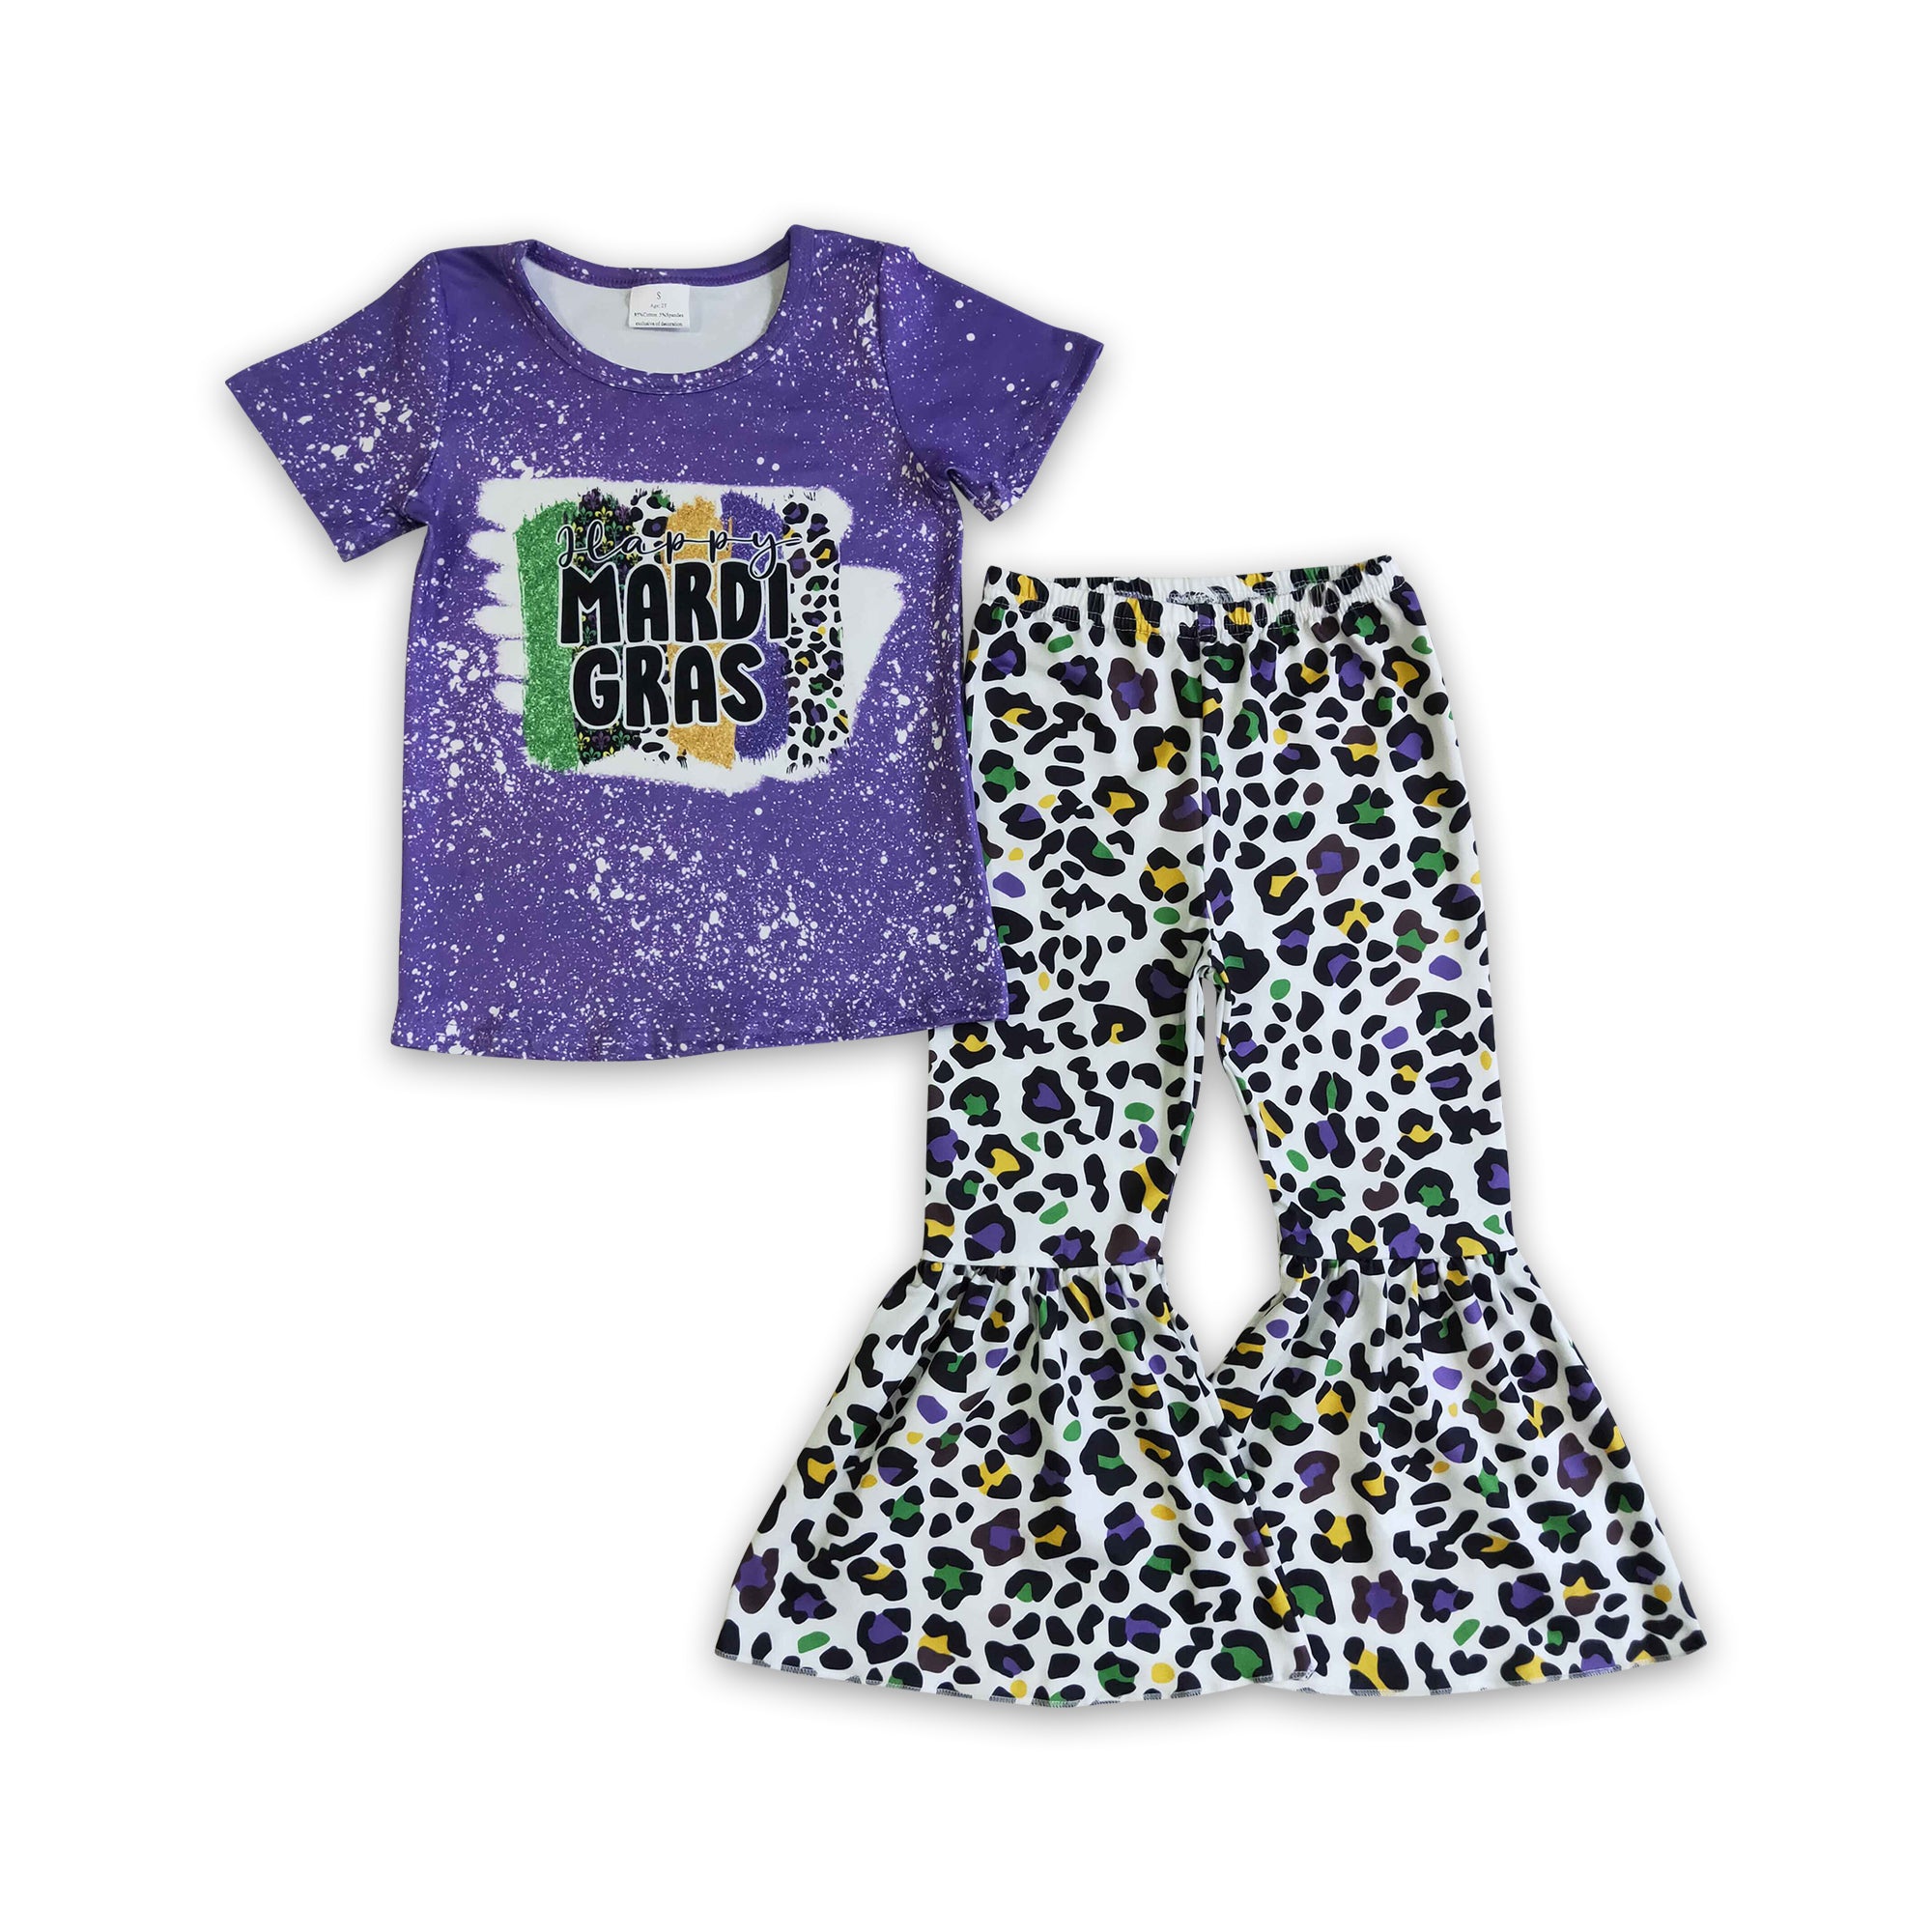 GSPO0221 Mardi Gras baby girl clothes purple set